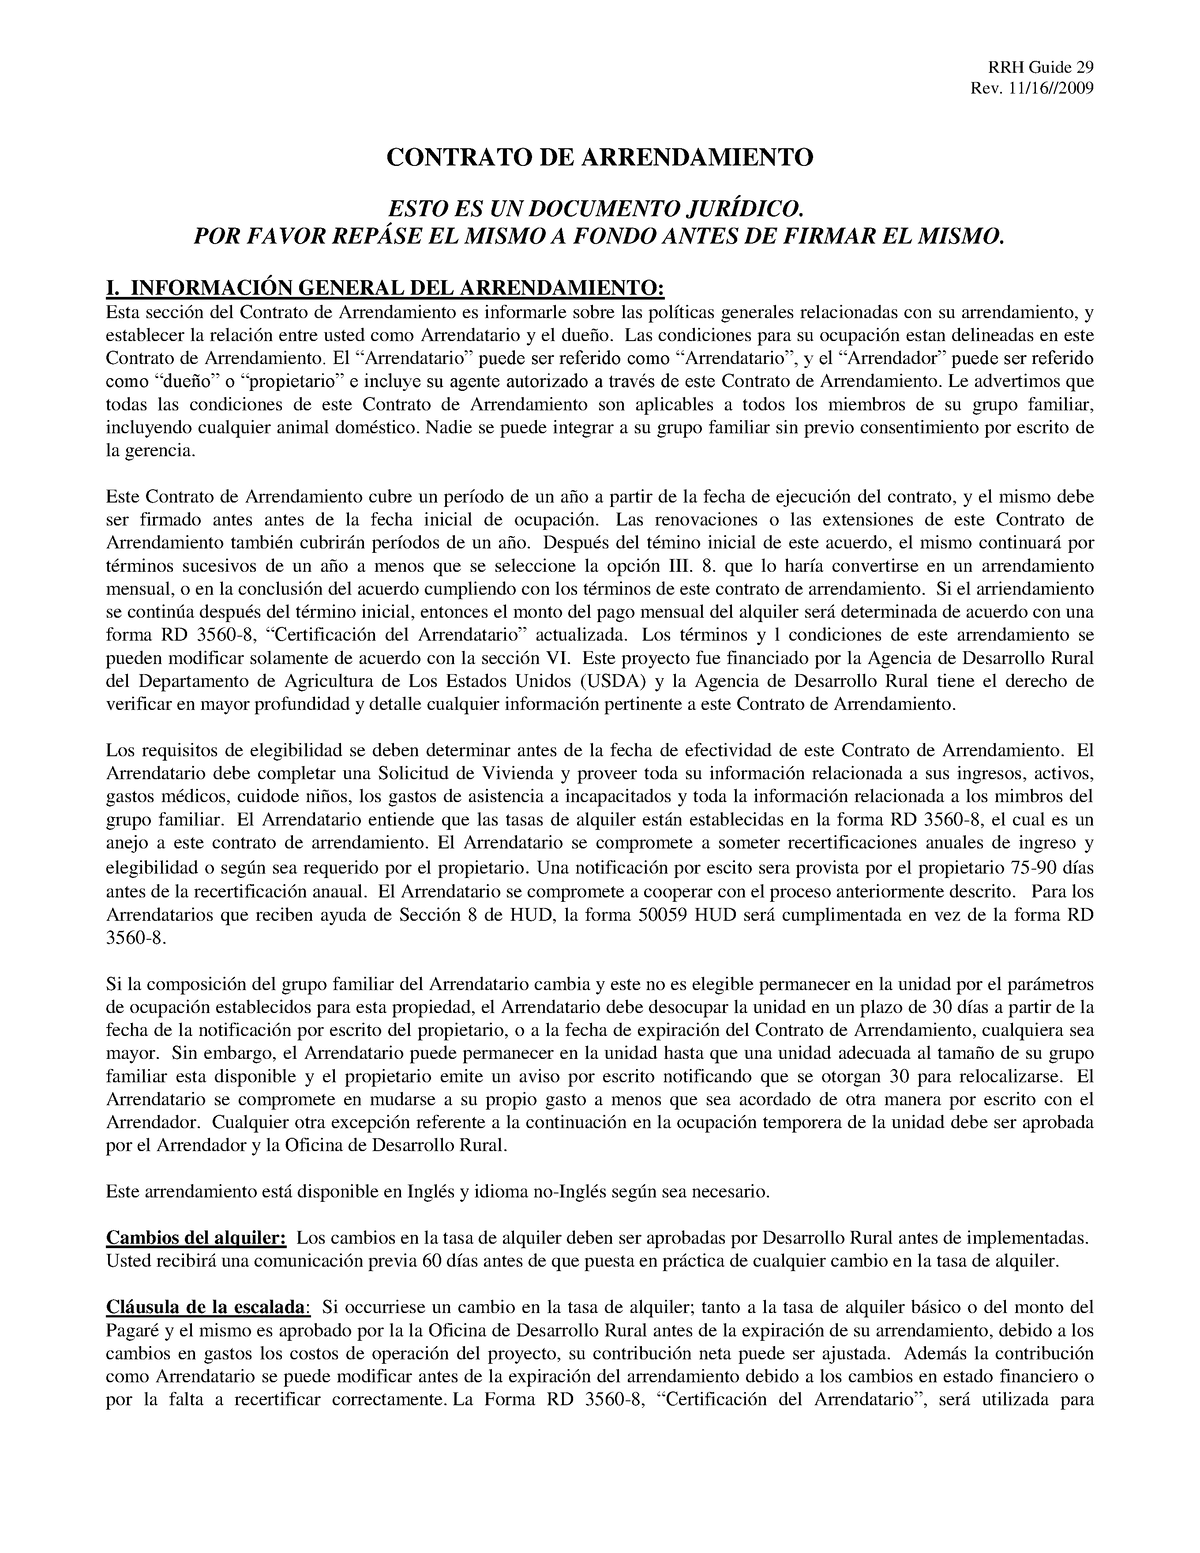 Mo Lease Agreement G29 Spanish Nov 162009 Rrh Guide 29 Rev 1116 Contrato De Arrendamiento 2472